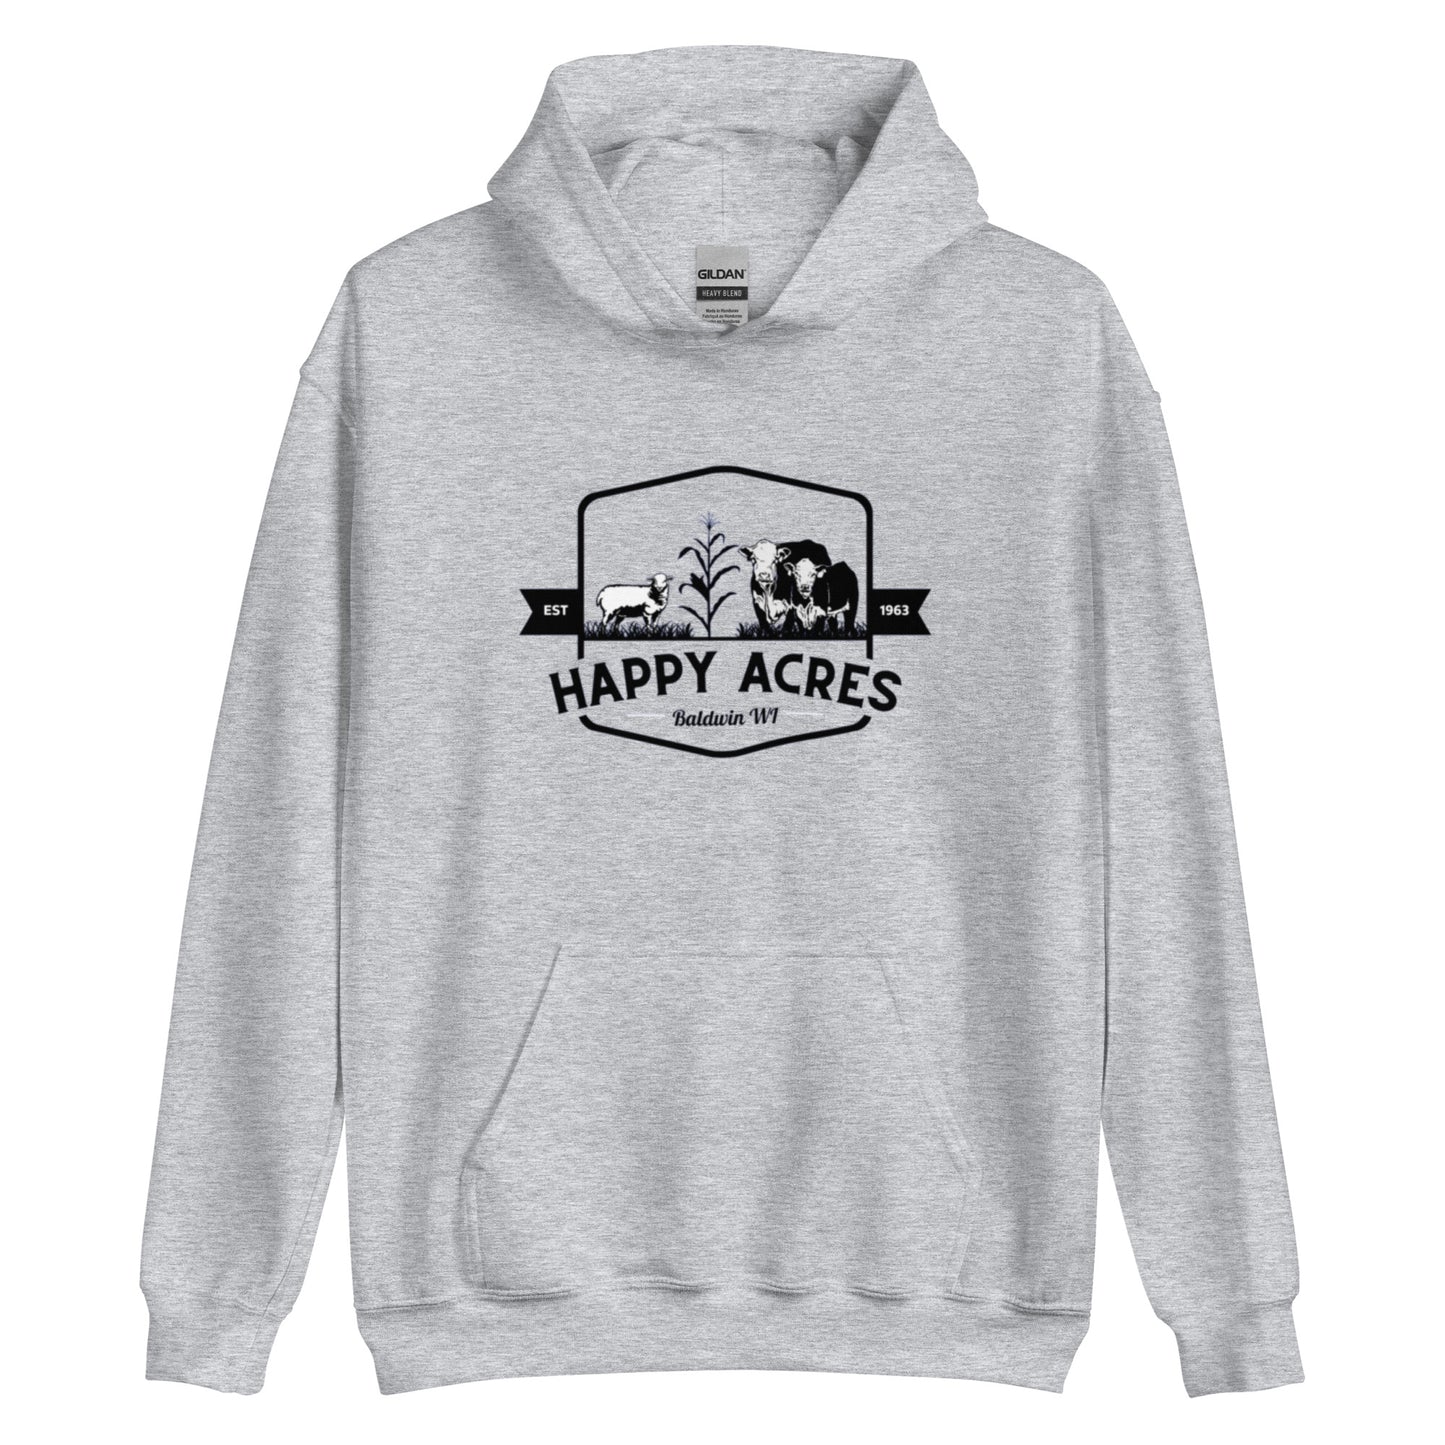 HAPPY ACRES -  HOODIE